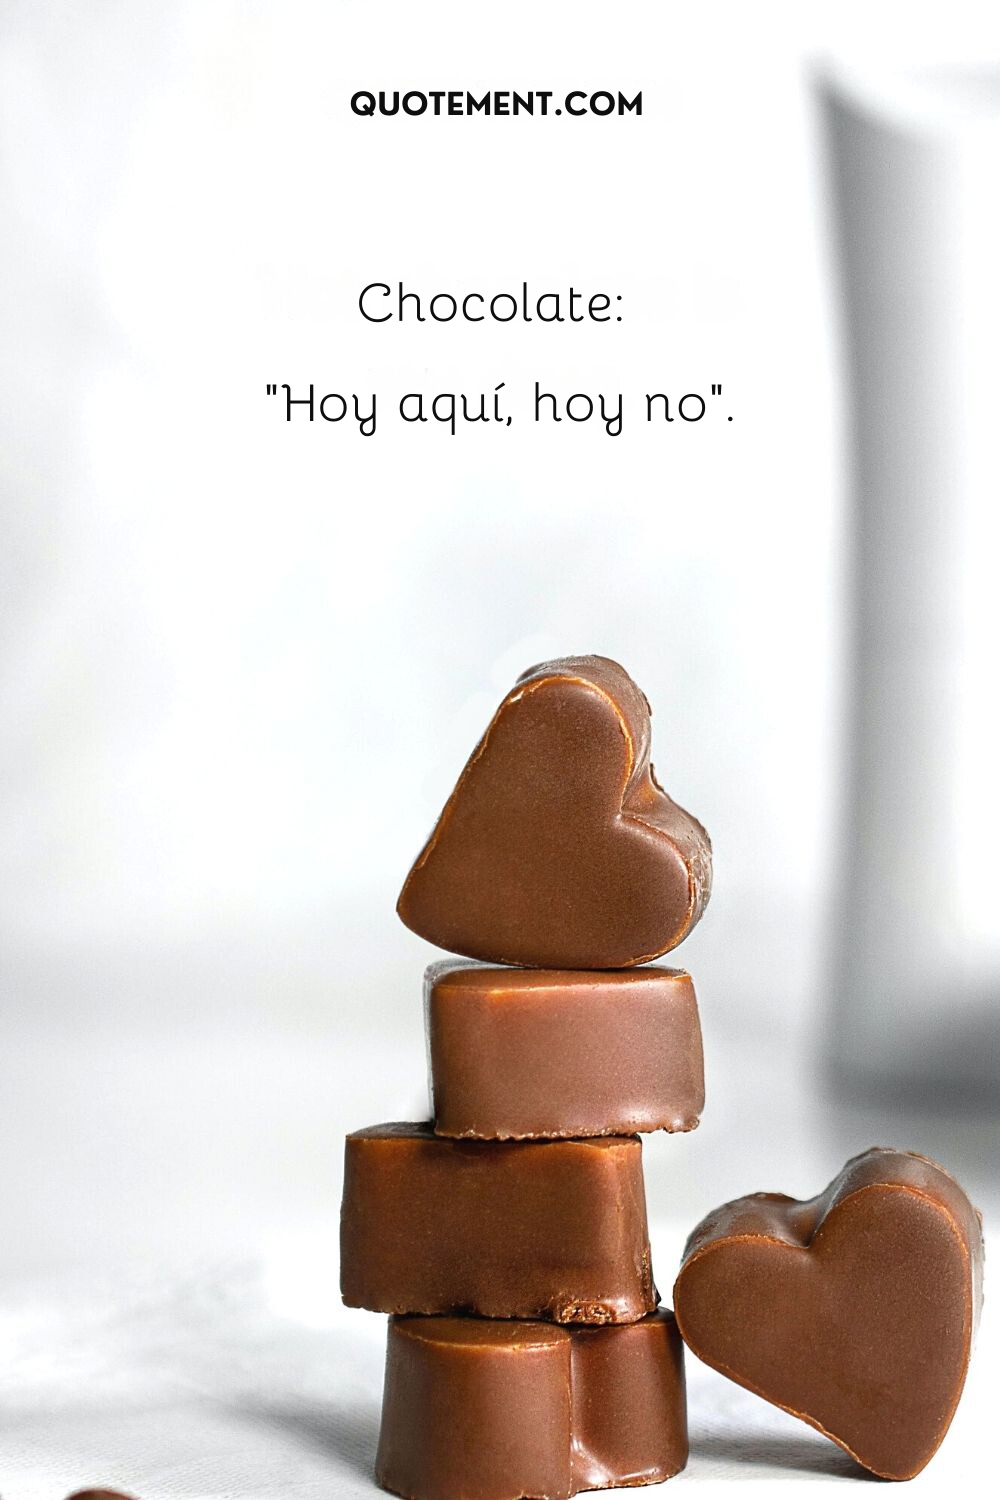 Chocolate "Hoy estoy, hoy me voy".